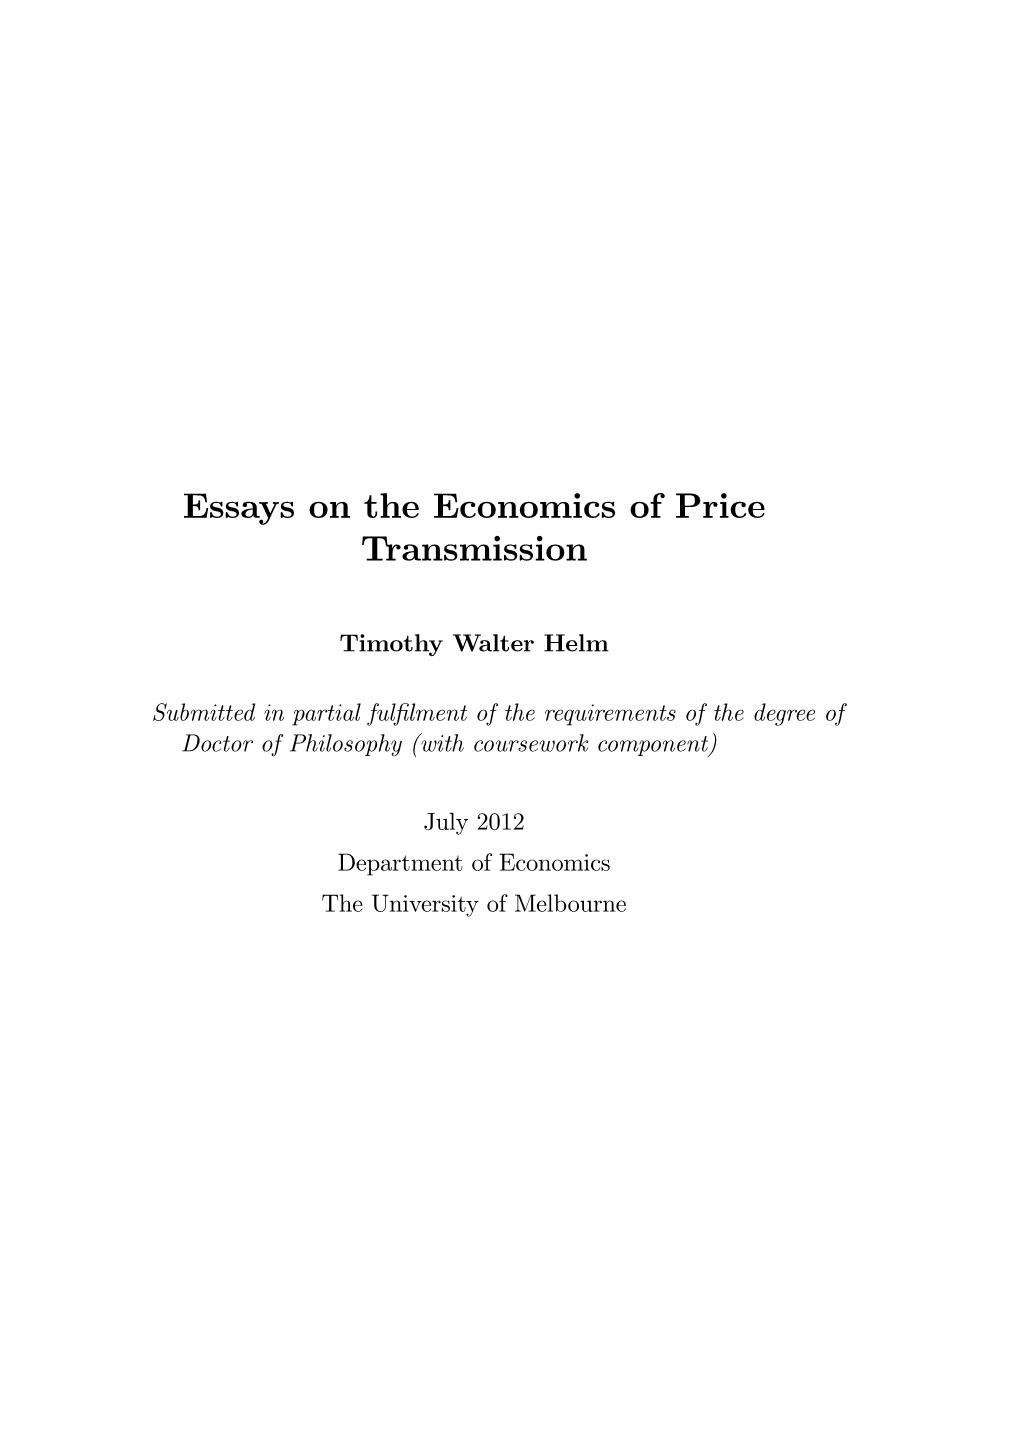 Essays on the Economics of Price Transmission